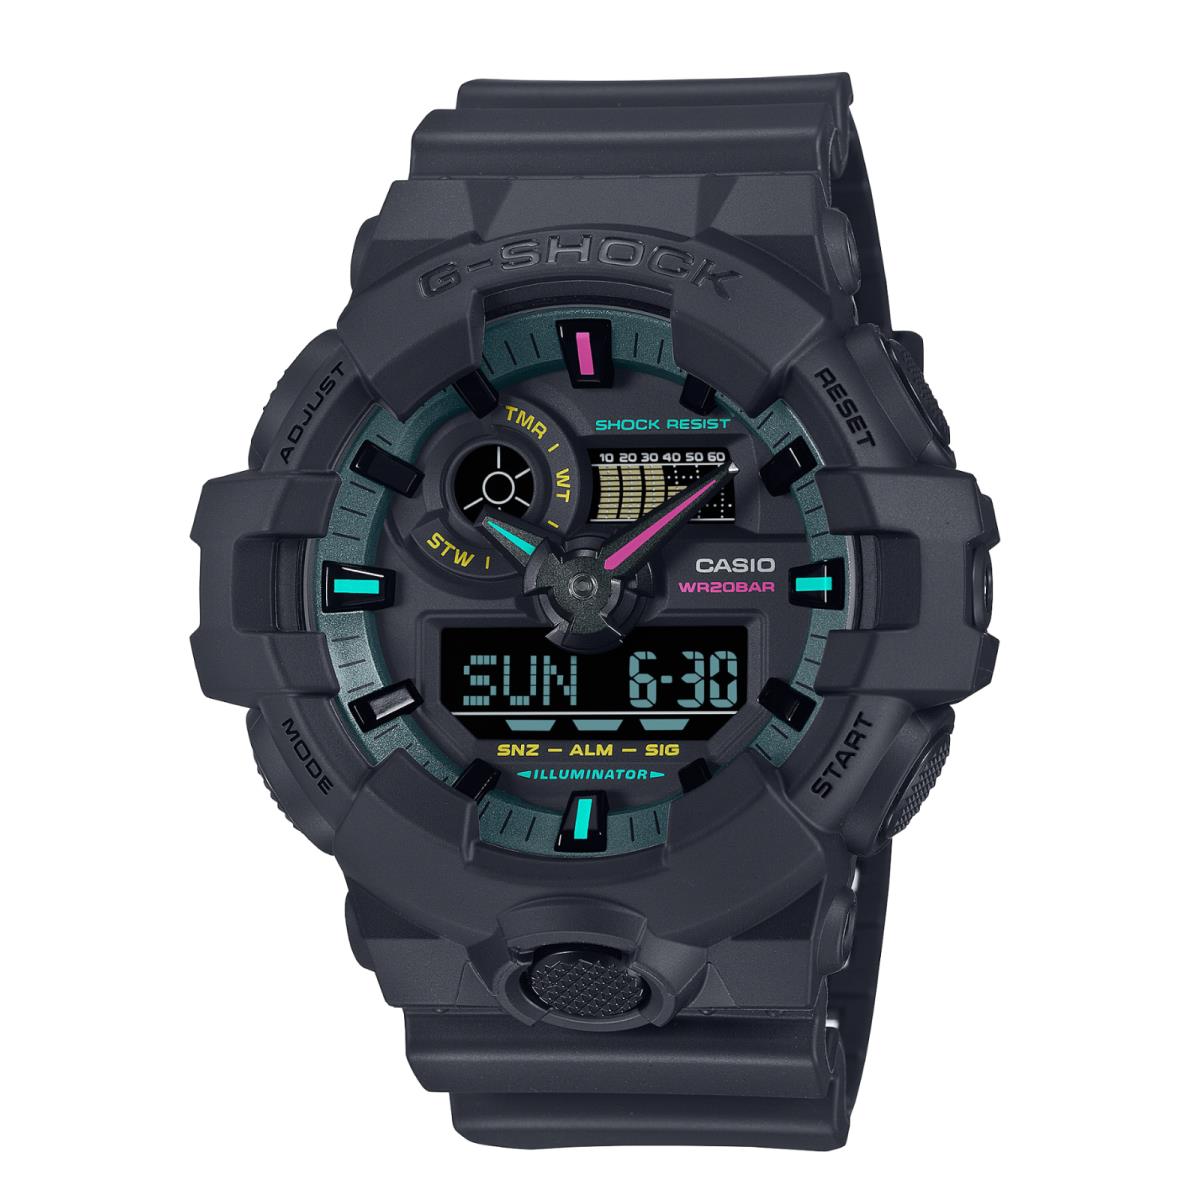 Casio G-shock GA-700MF-1A GA-700 Series Ana-digi Matte Black Rubber Wrist Watch - Dial: Black, Band: Black, Bezel: Black